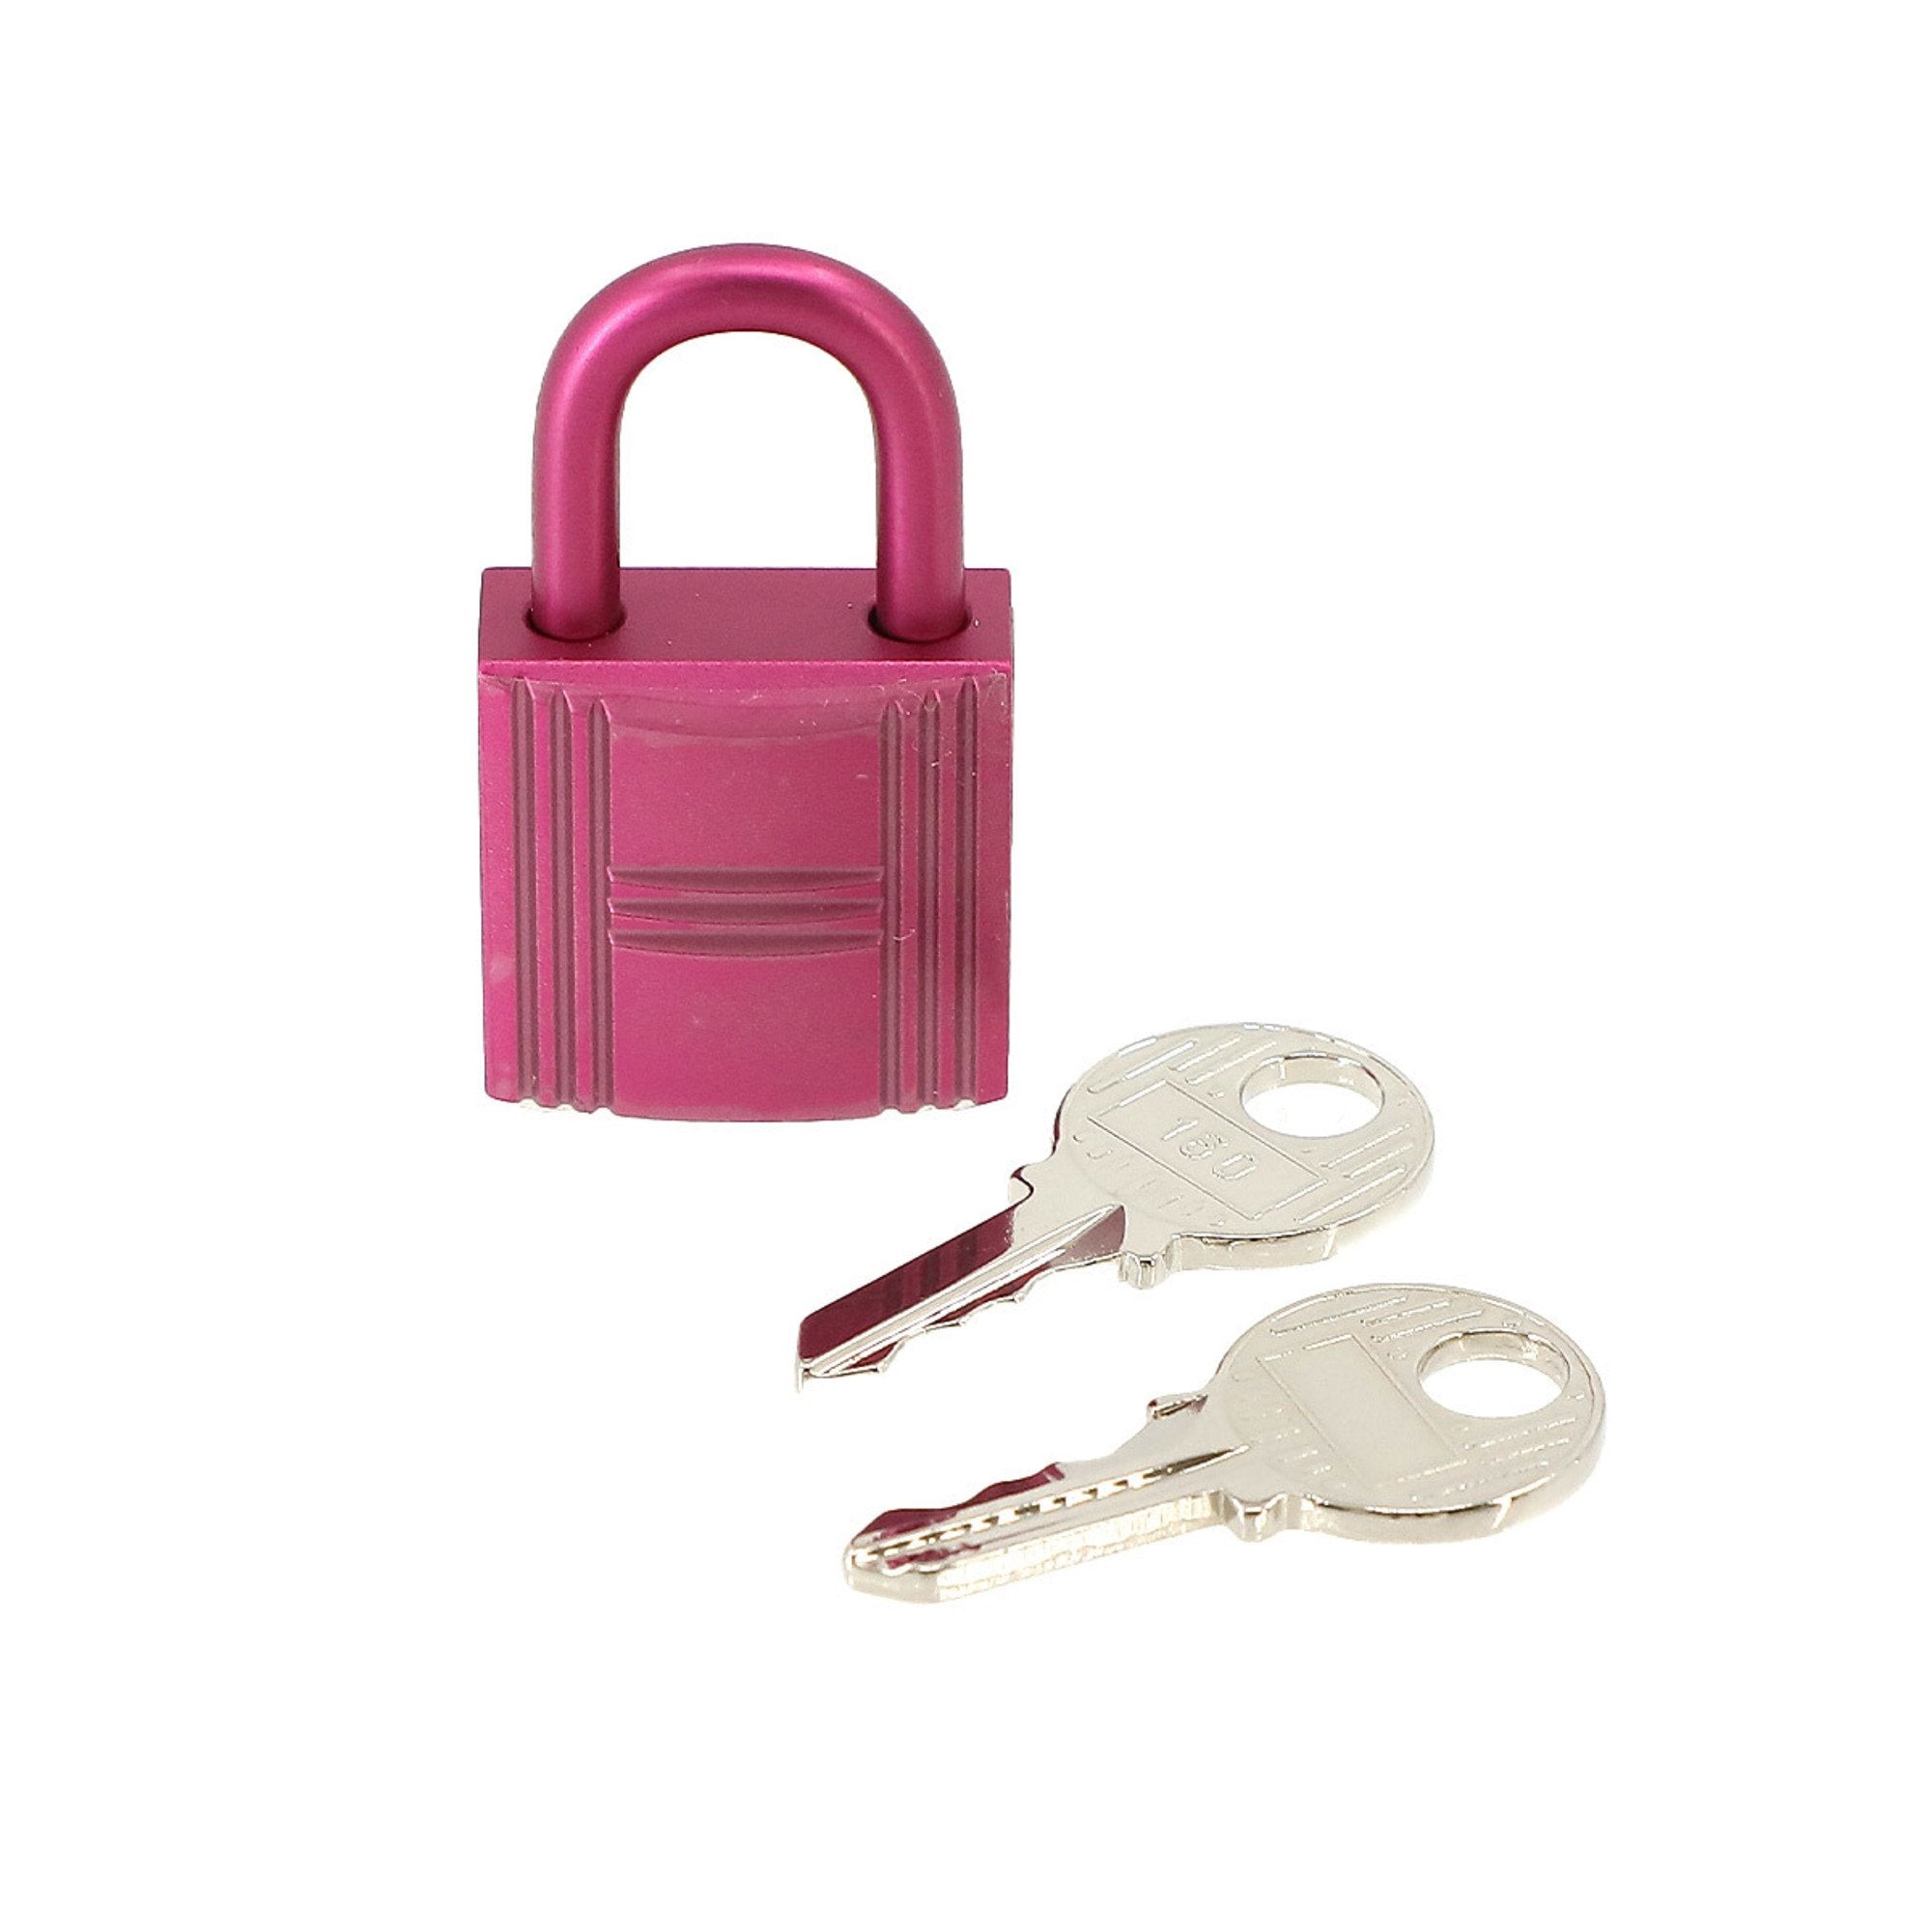 image of HERMES Cadena Key Set Padlock Monochrome Saw Pink Silver Lock